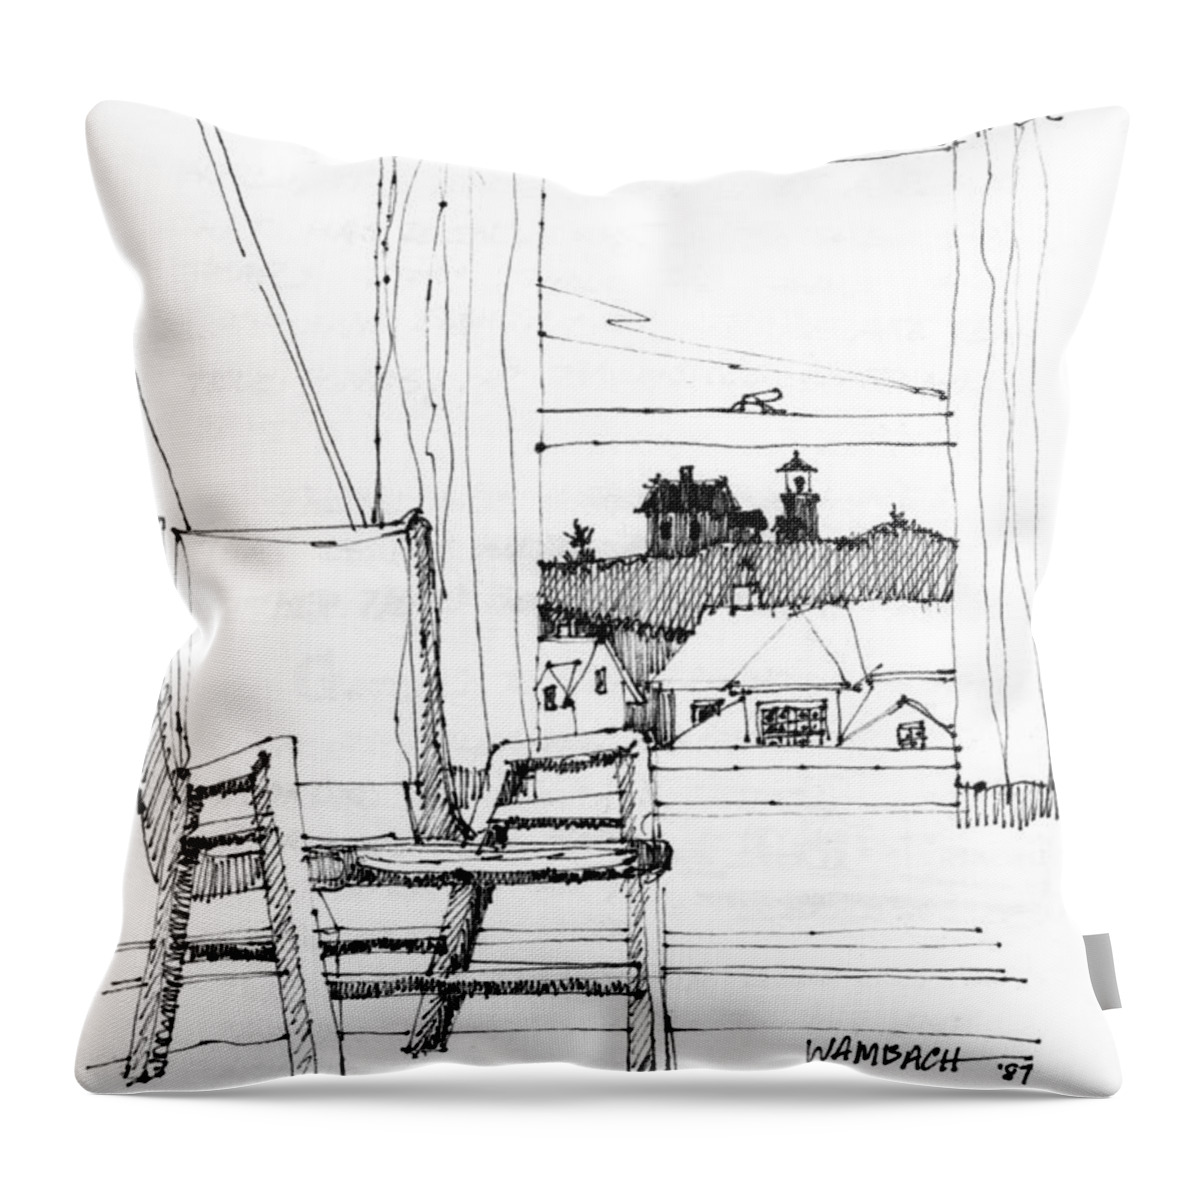 Monhegan Island Throw Pillow featuring the drawing Monhegan Dawn Island Inn by Richard Wambach